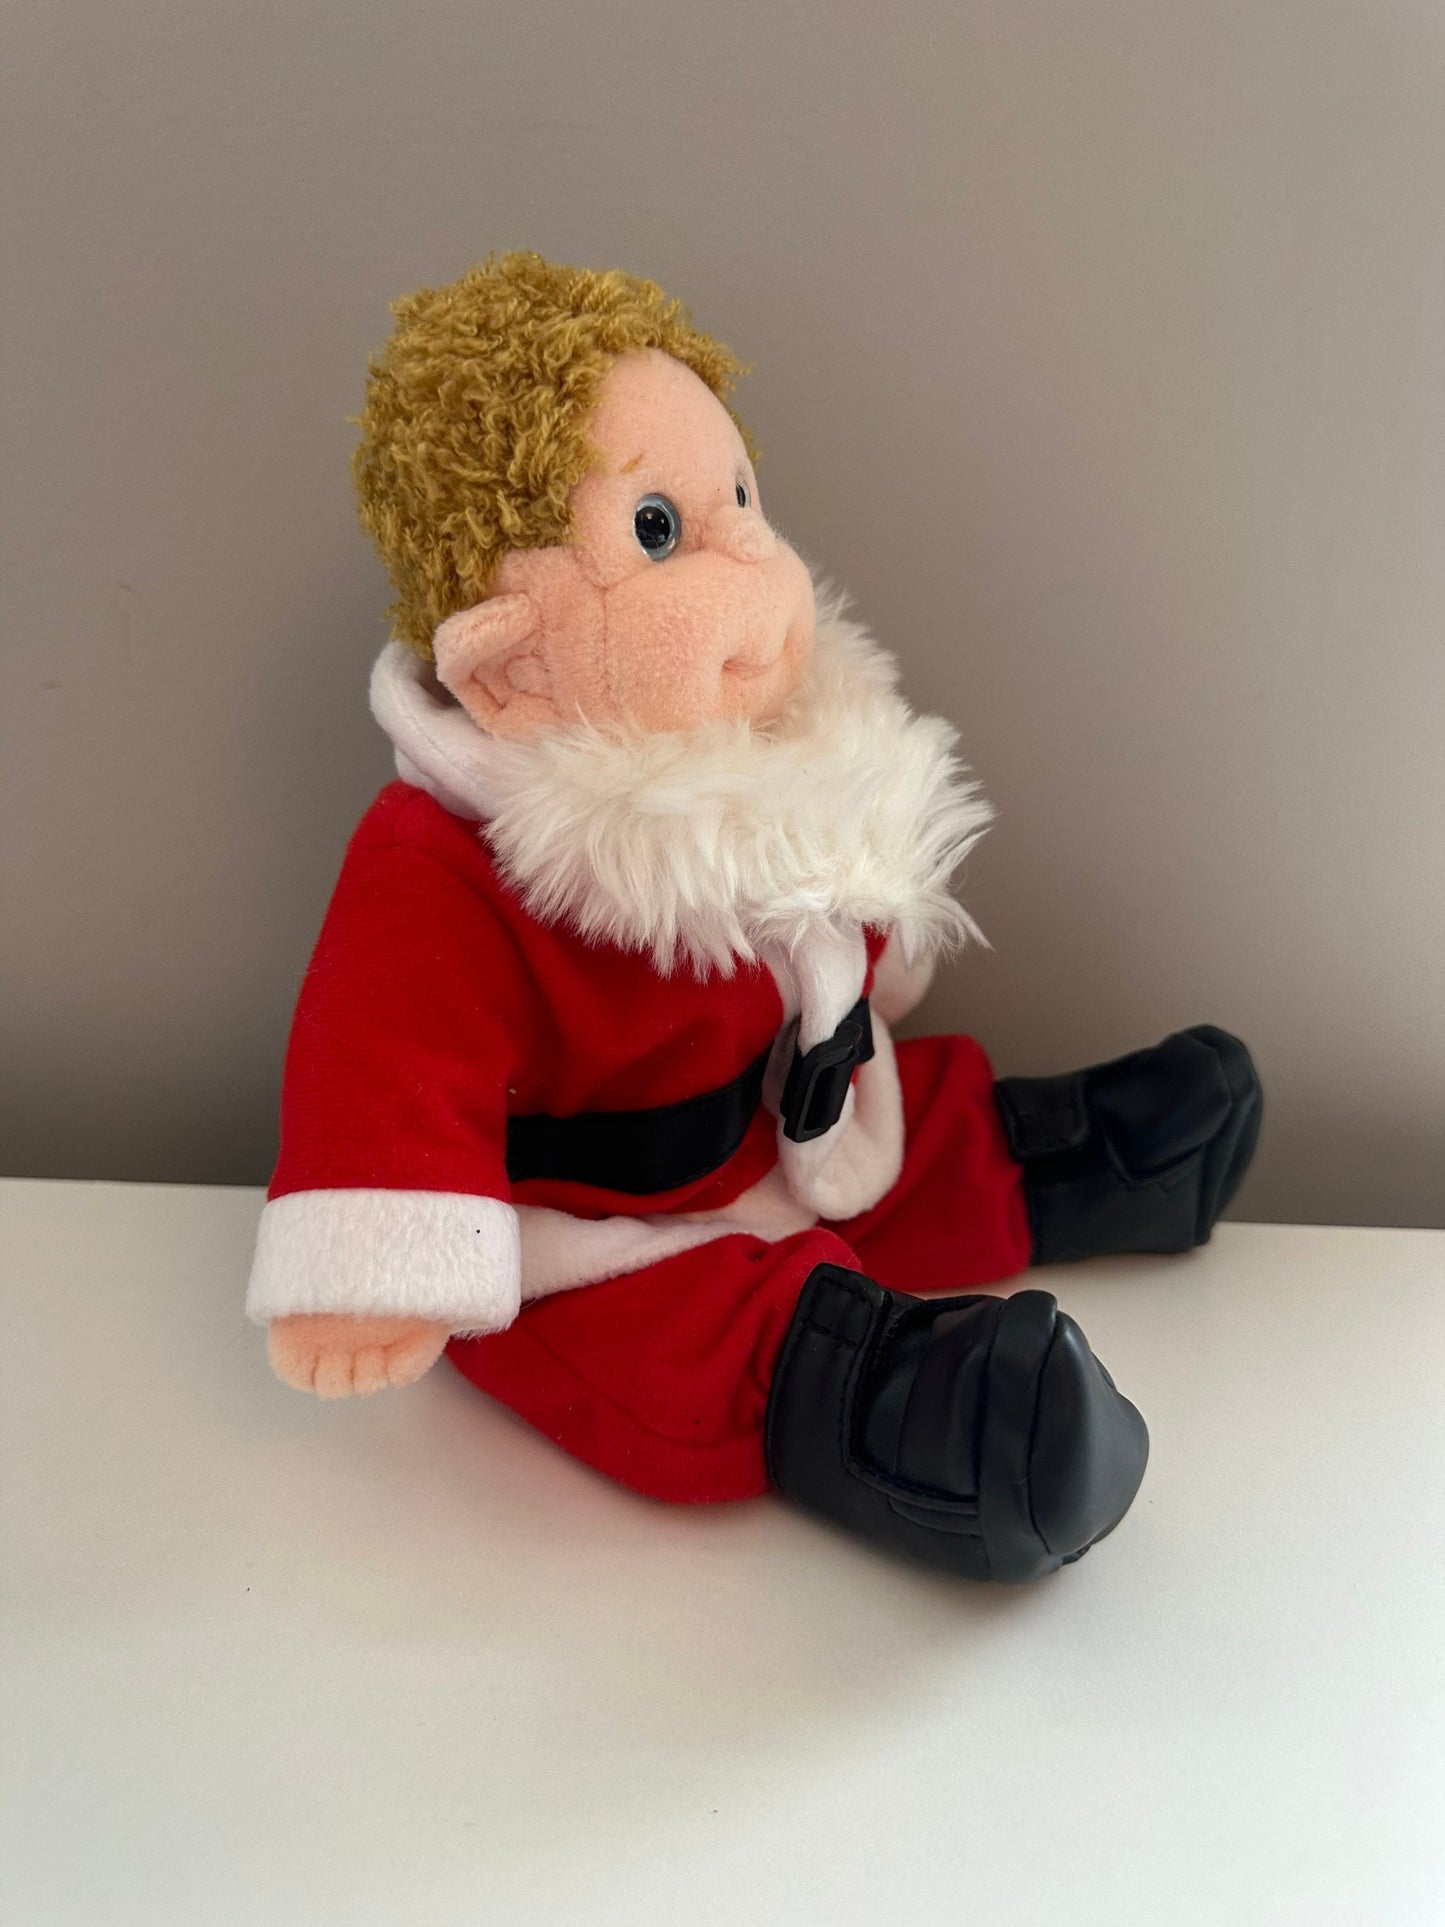 Ty Beanie Kid “Boomer” the Boy Doll Plush wearing Santa Suit (10 inch)